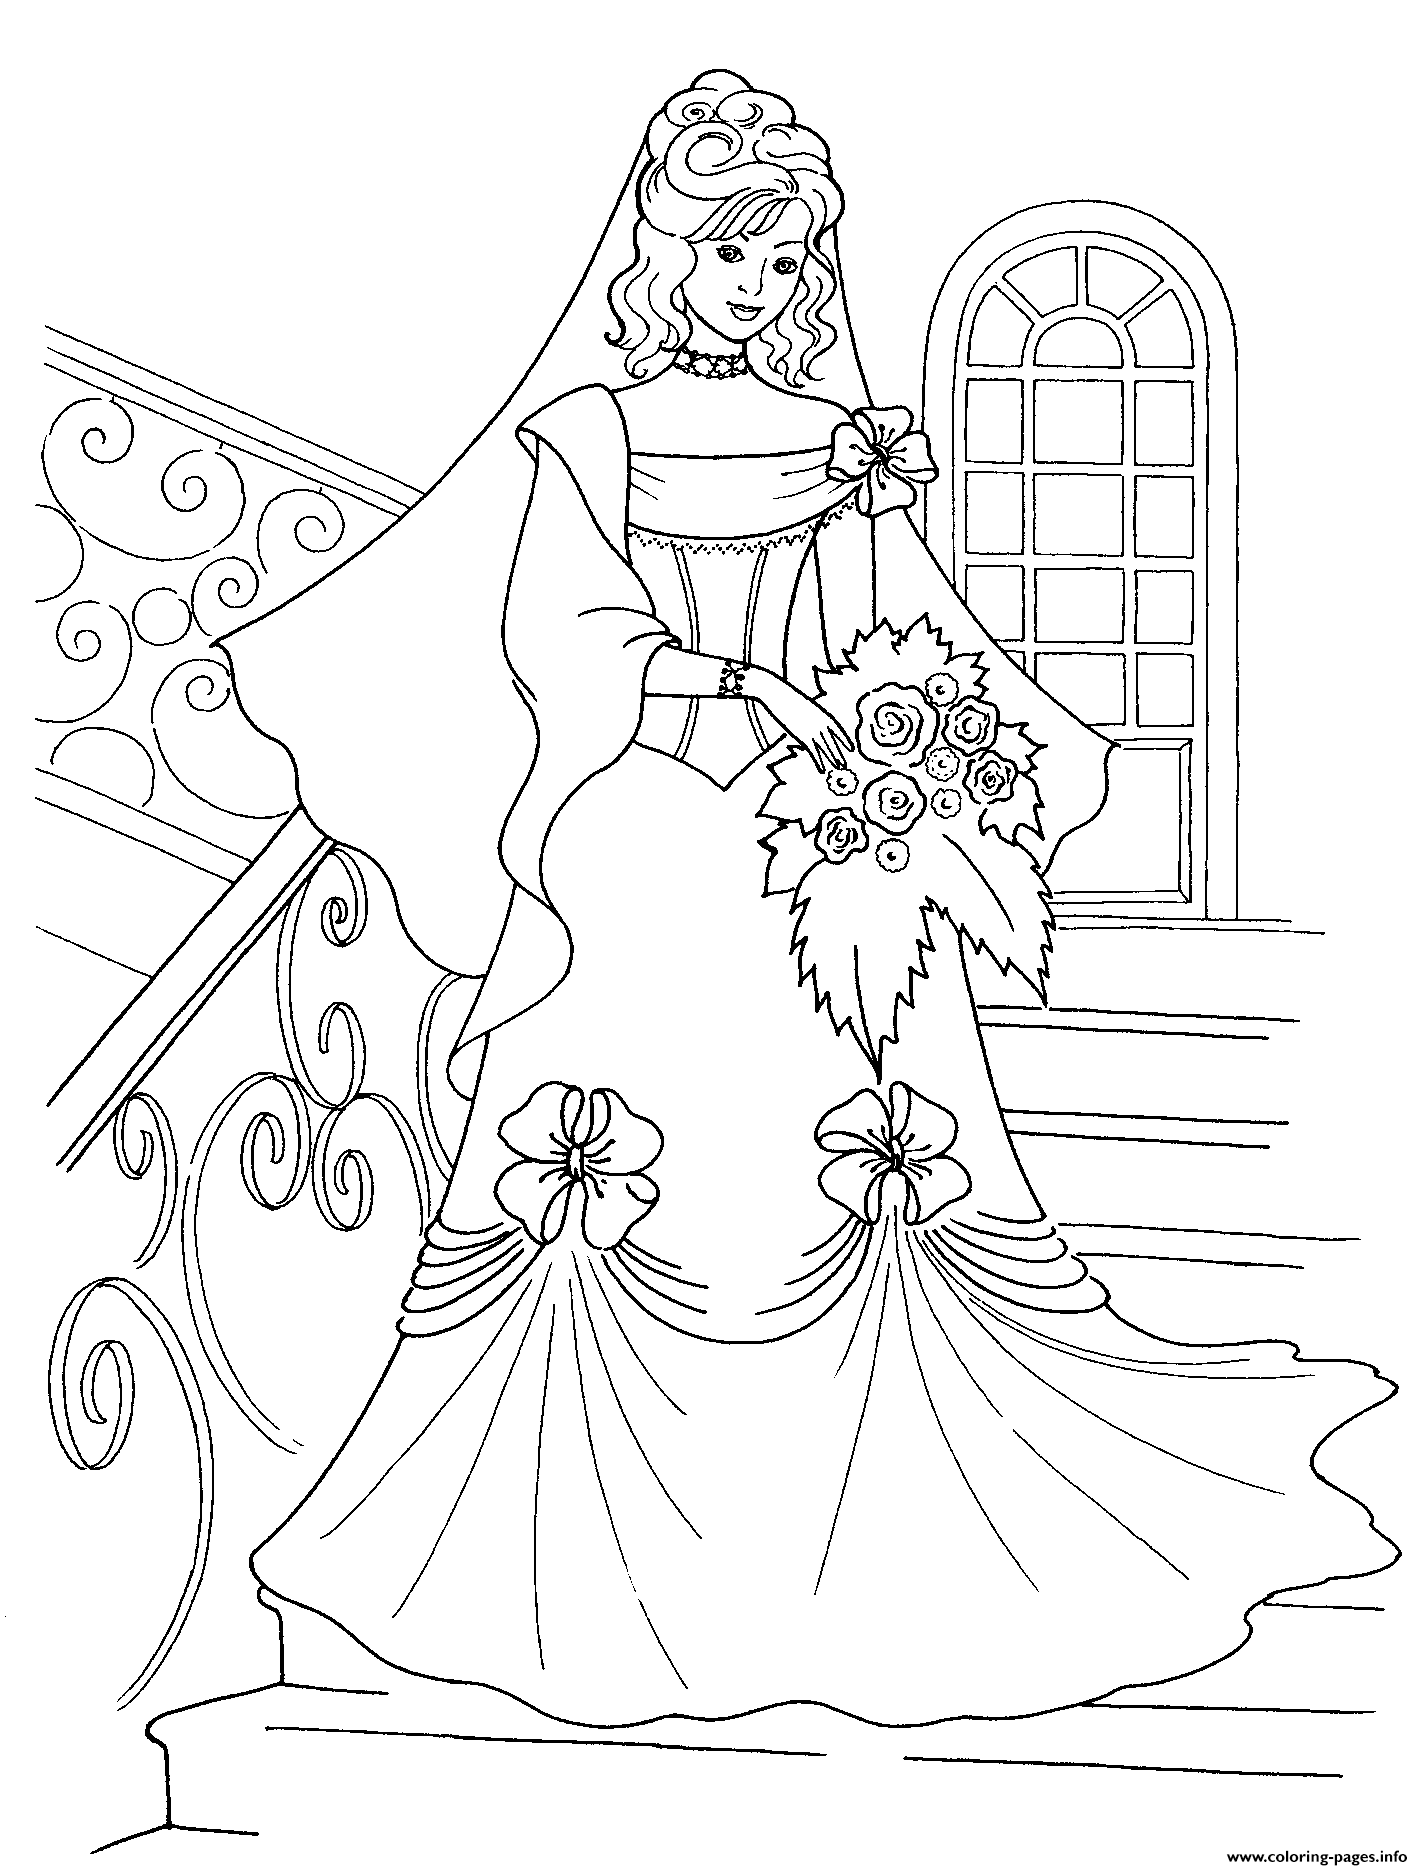 Princess And Her Wedding Dress coloring